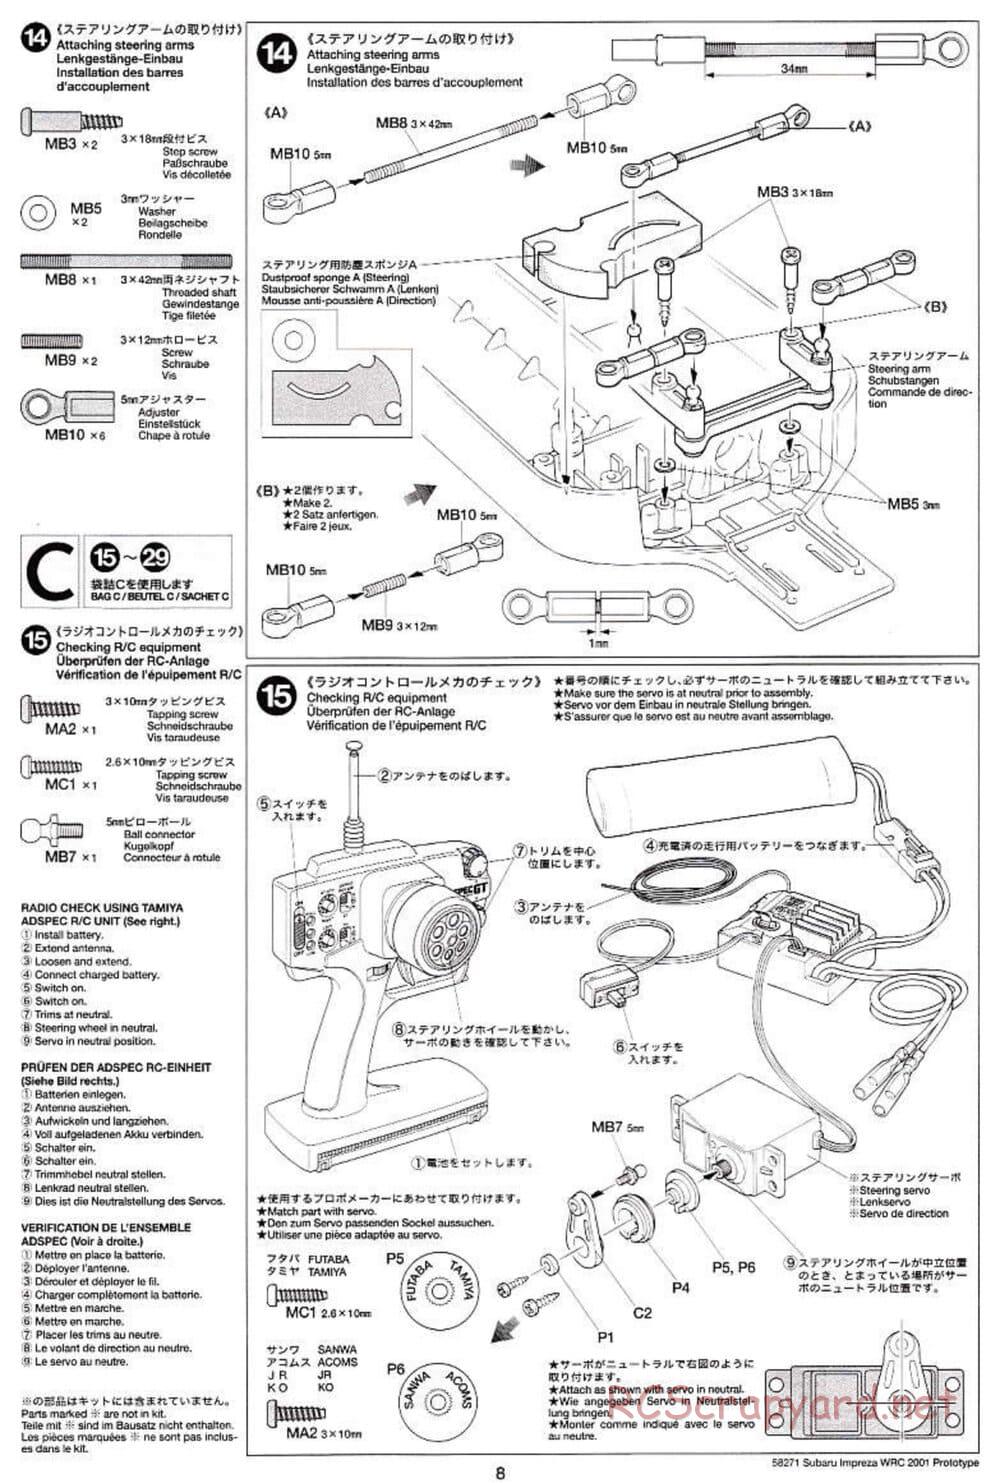 Tamiya - Subaru Impreza WRC 2001 Prototype - TB-01 Chassis - Manual - Page 8